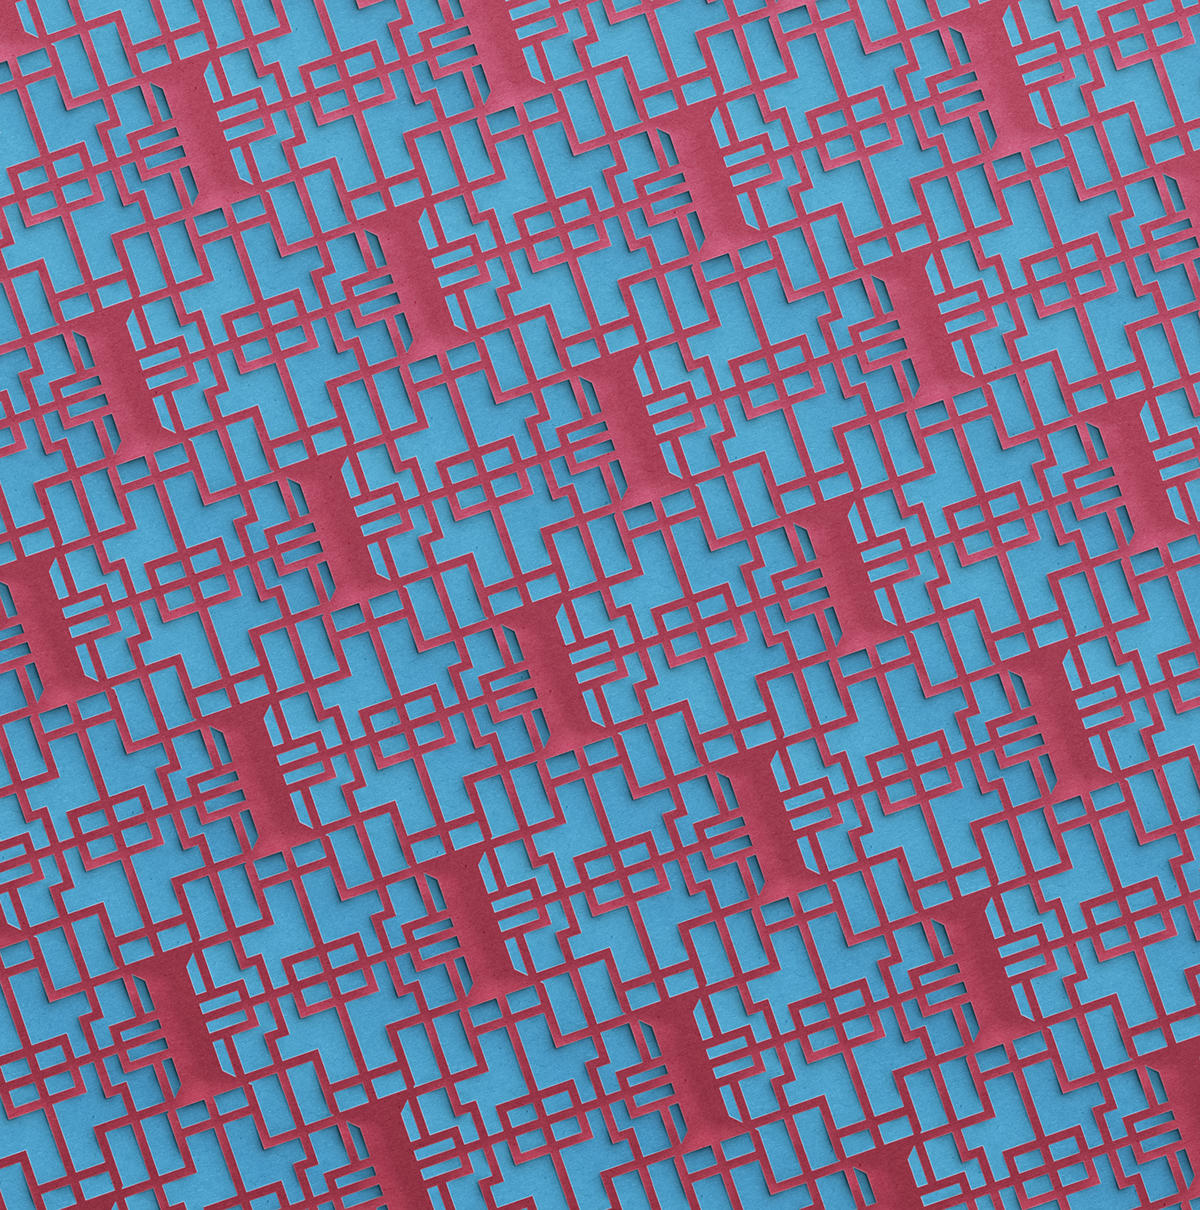 korean patterns Patterns Paper Cut-Out Digital Art  colordesign graphic design 